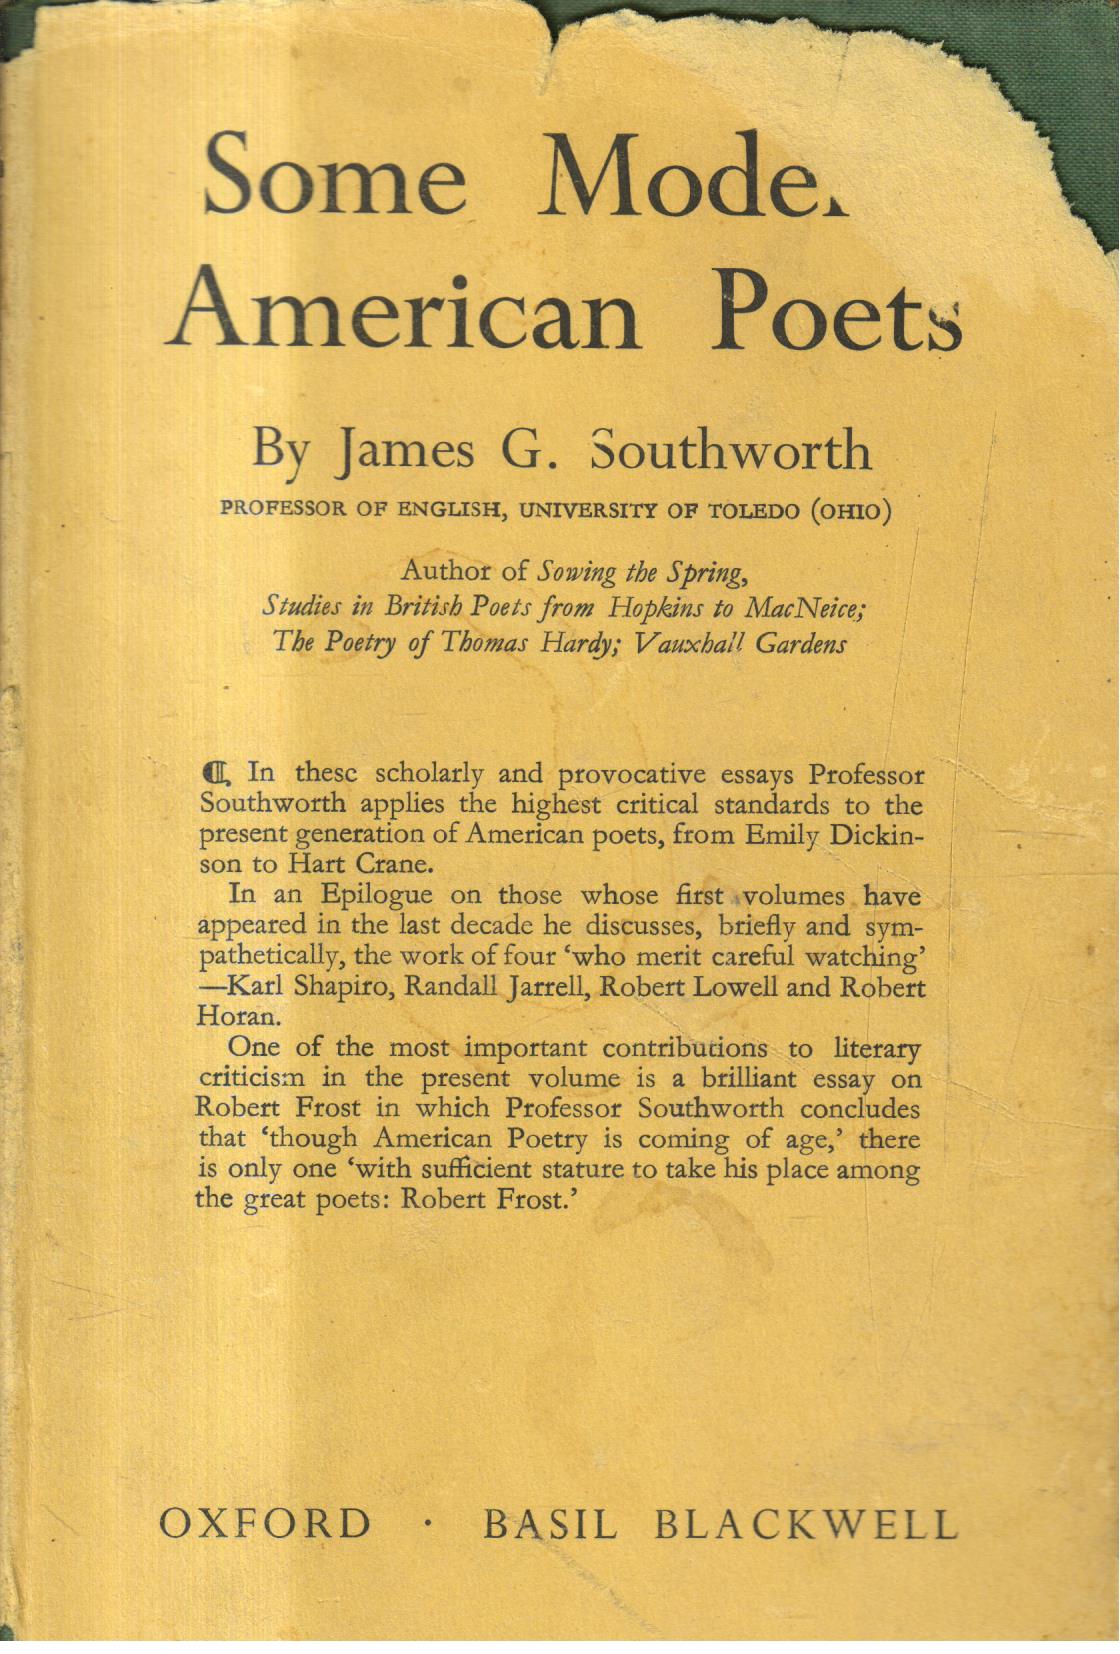 Some Modern American Poets